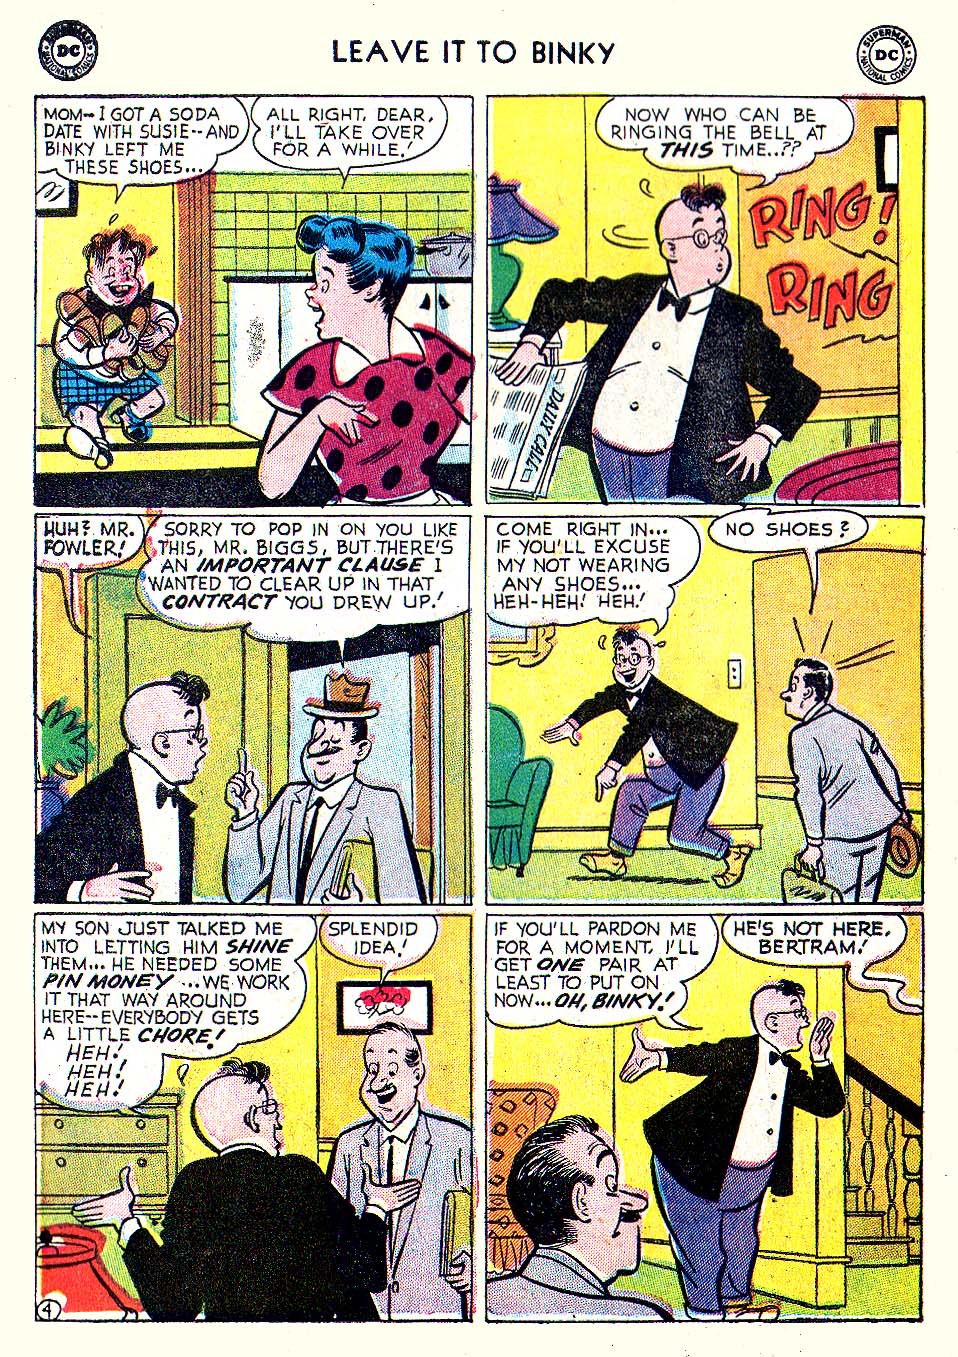 Read online Leave it to Binky comic -  Issue #46 - 29